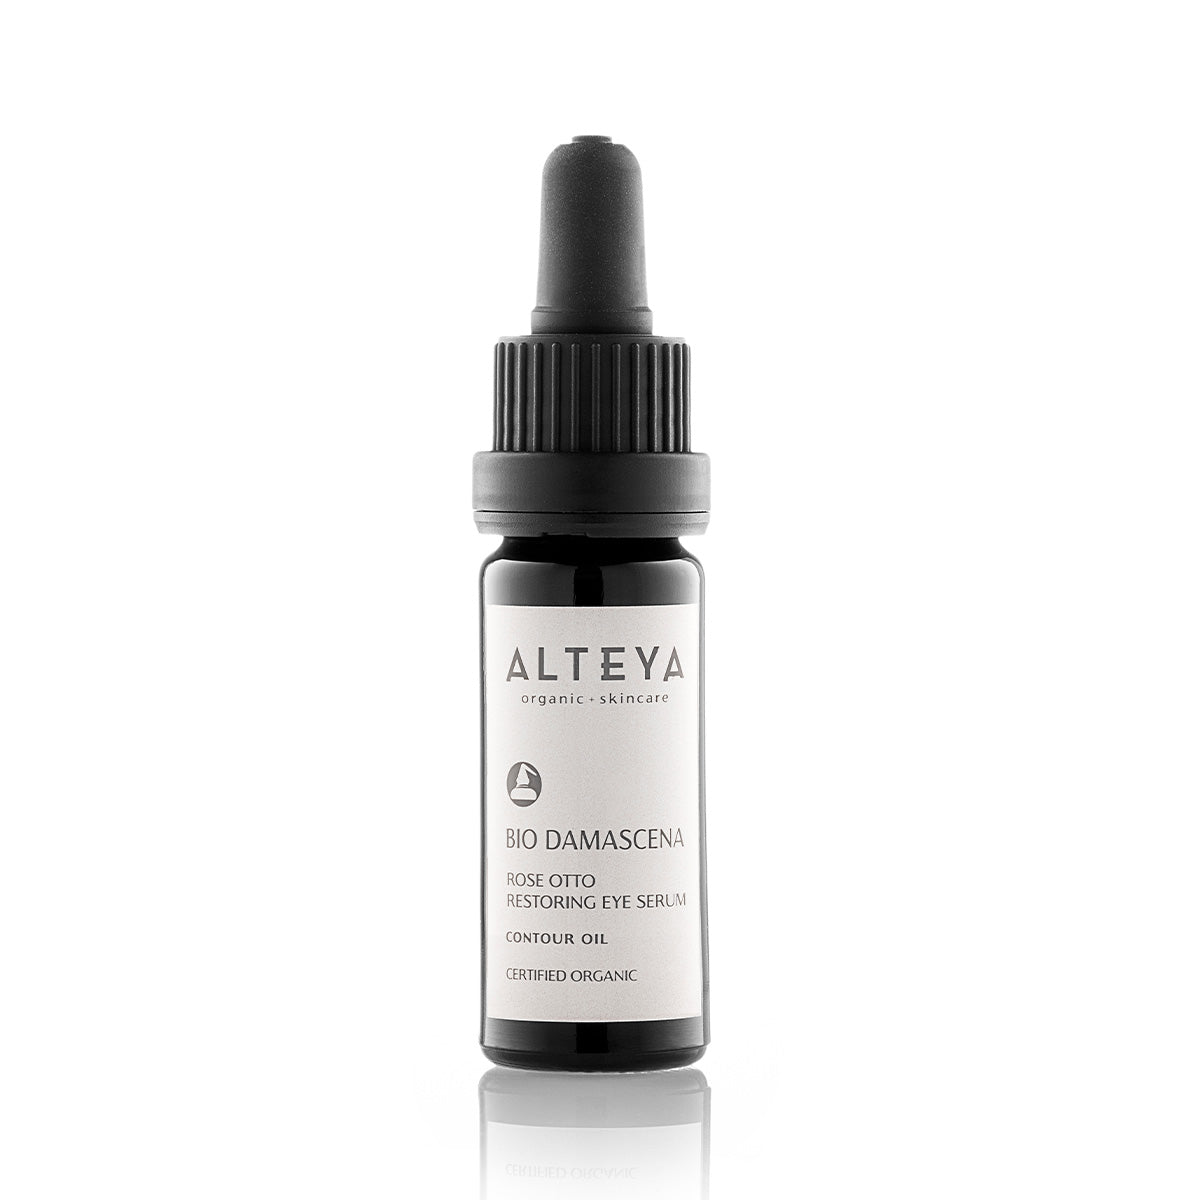 A bottle of Alteya Organics Bio Damascena Rose Otto Restoring Eye Serum, known for its skin-reviving complex, on a white background.